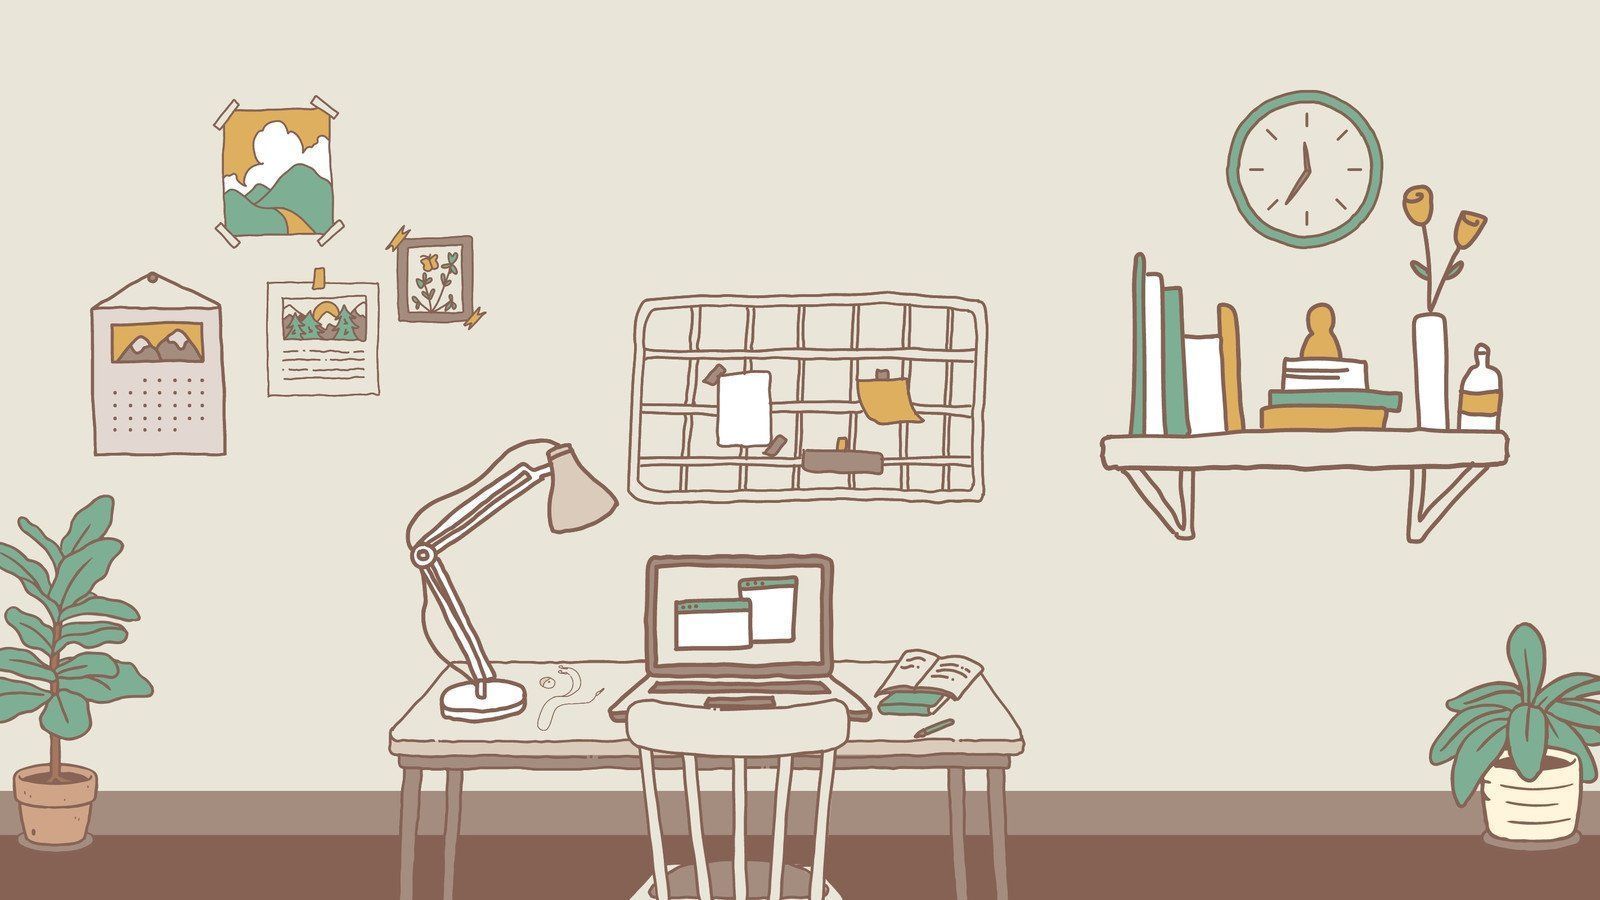 Illustration of a desk with a laptop, lamp, books, and plants. - Desktop, laptop, computer, study, school, illustration